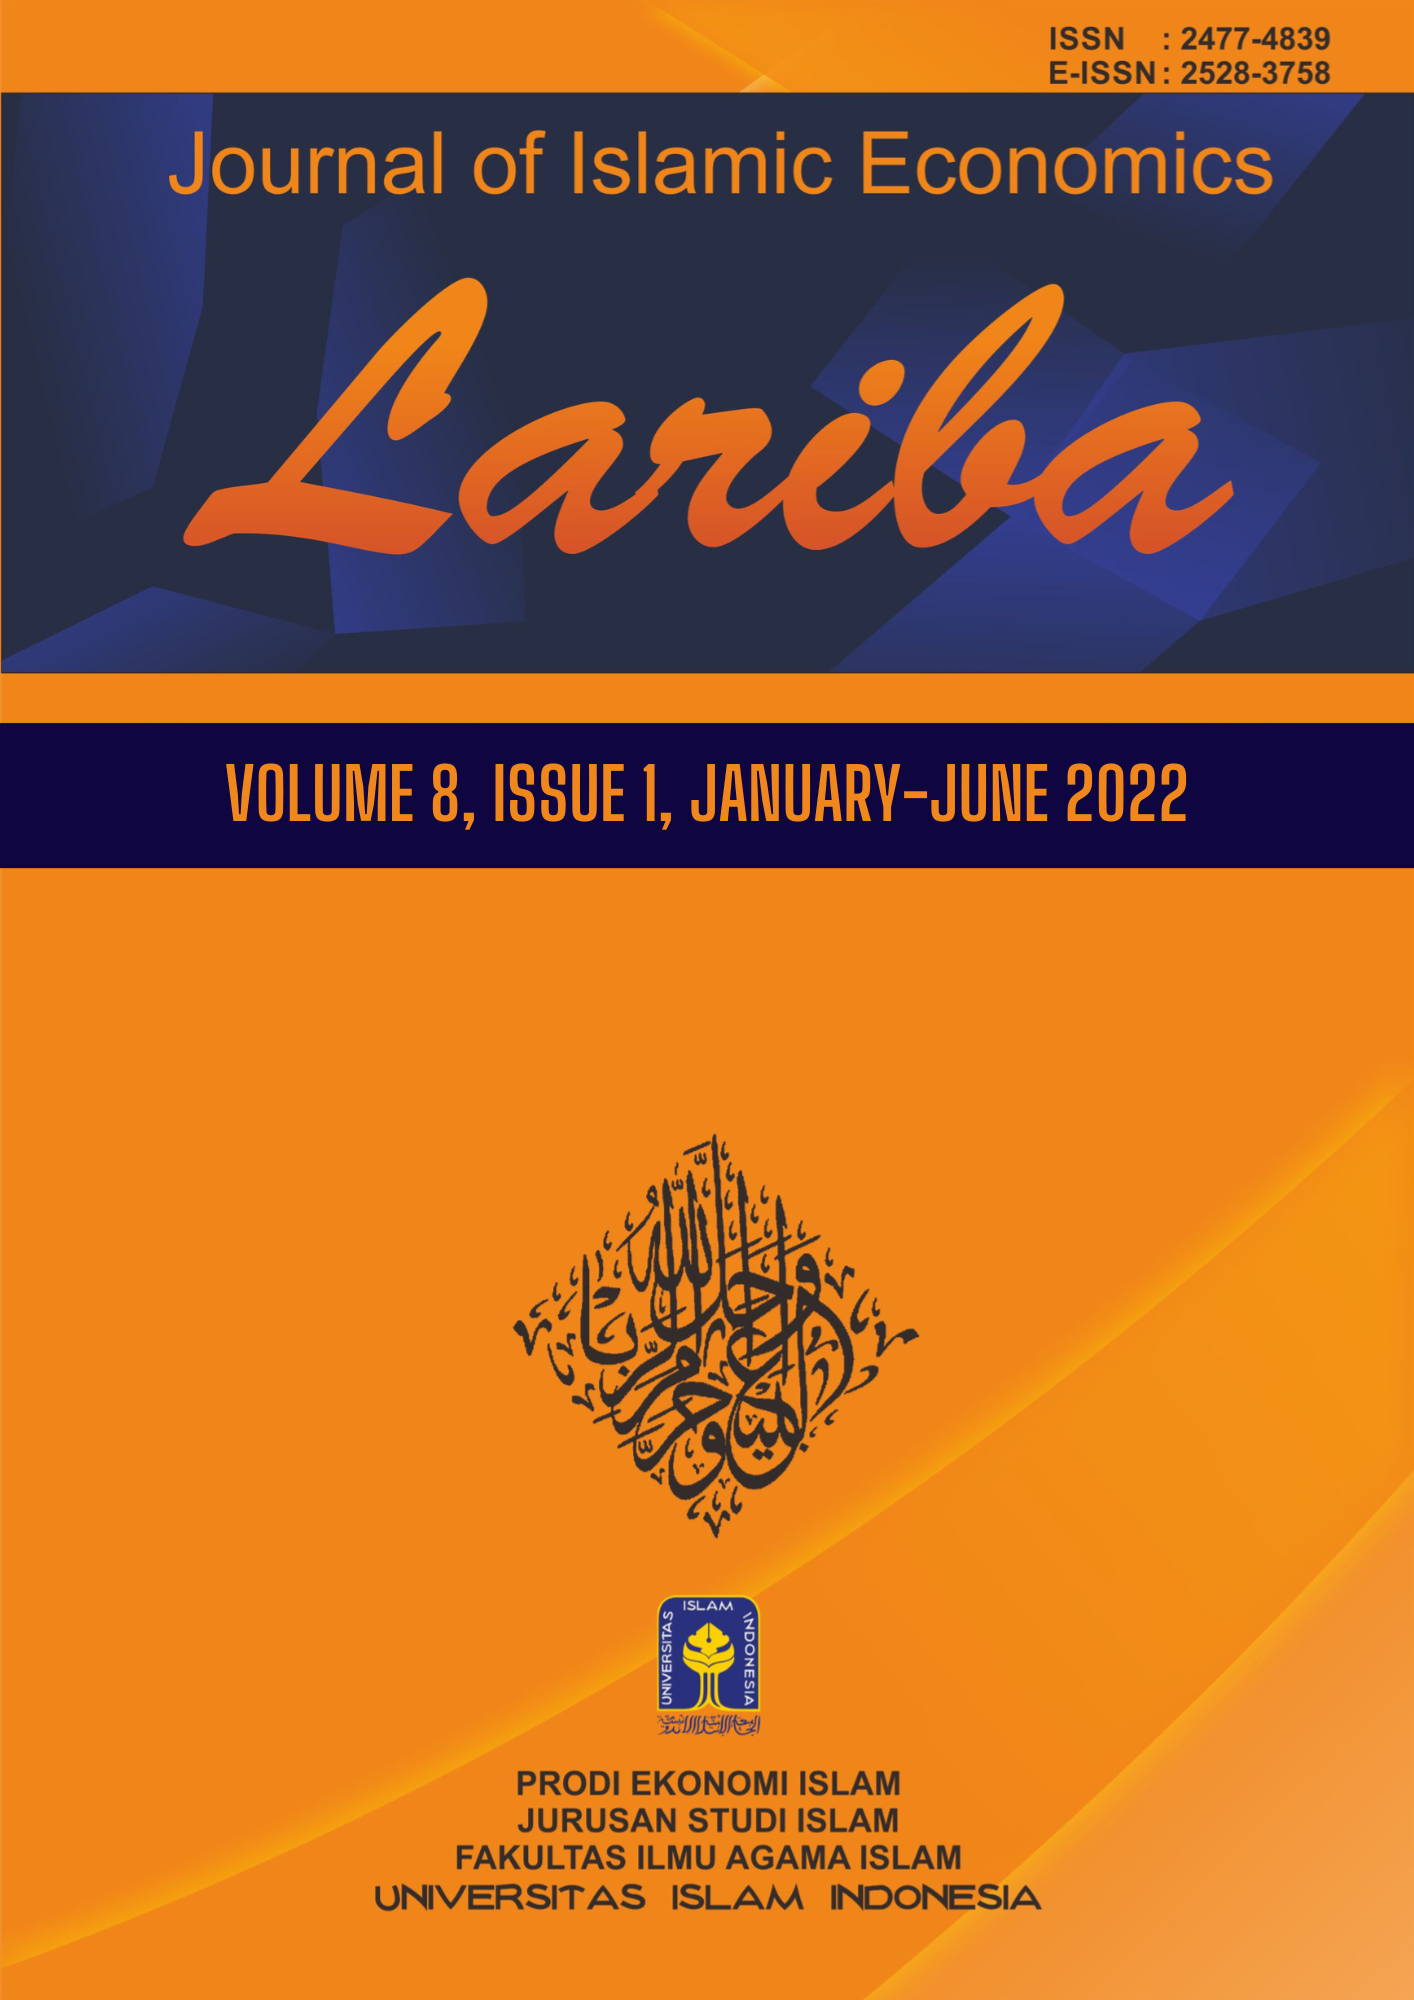 Cover JIELariba Volume 8, Issue 1, January-June 2022